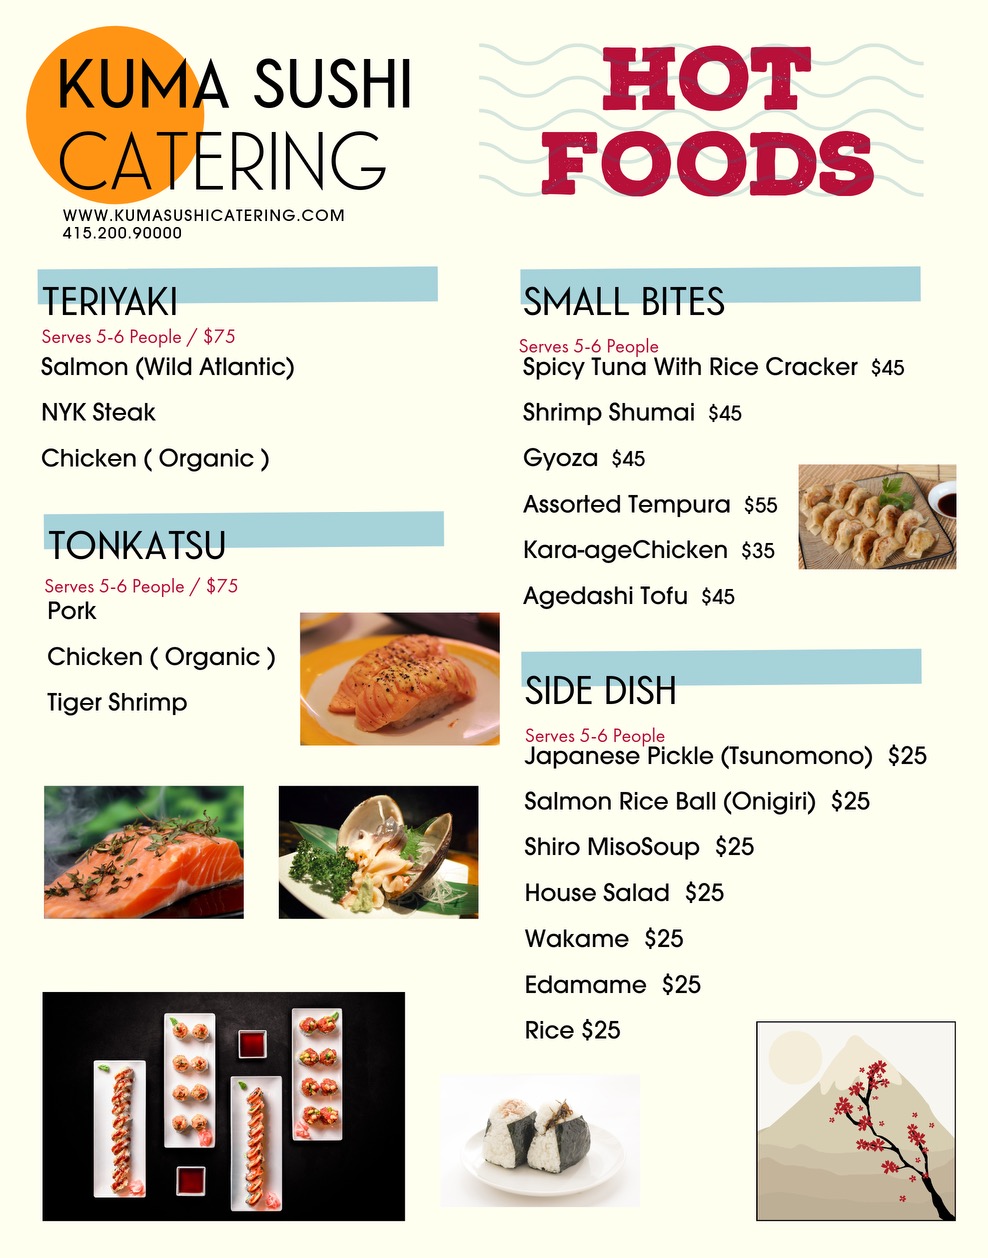 Kuma Sushi Catering Service Menu Page 2 (Hot Foods)